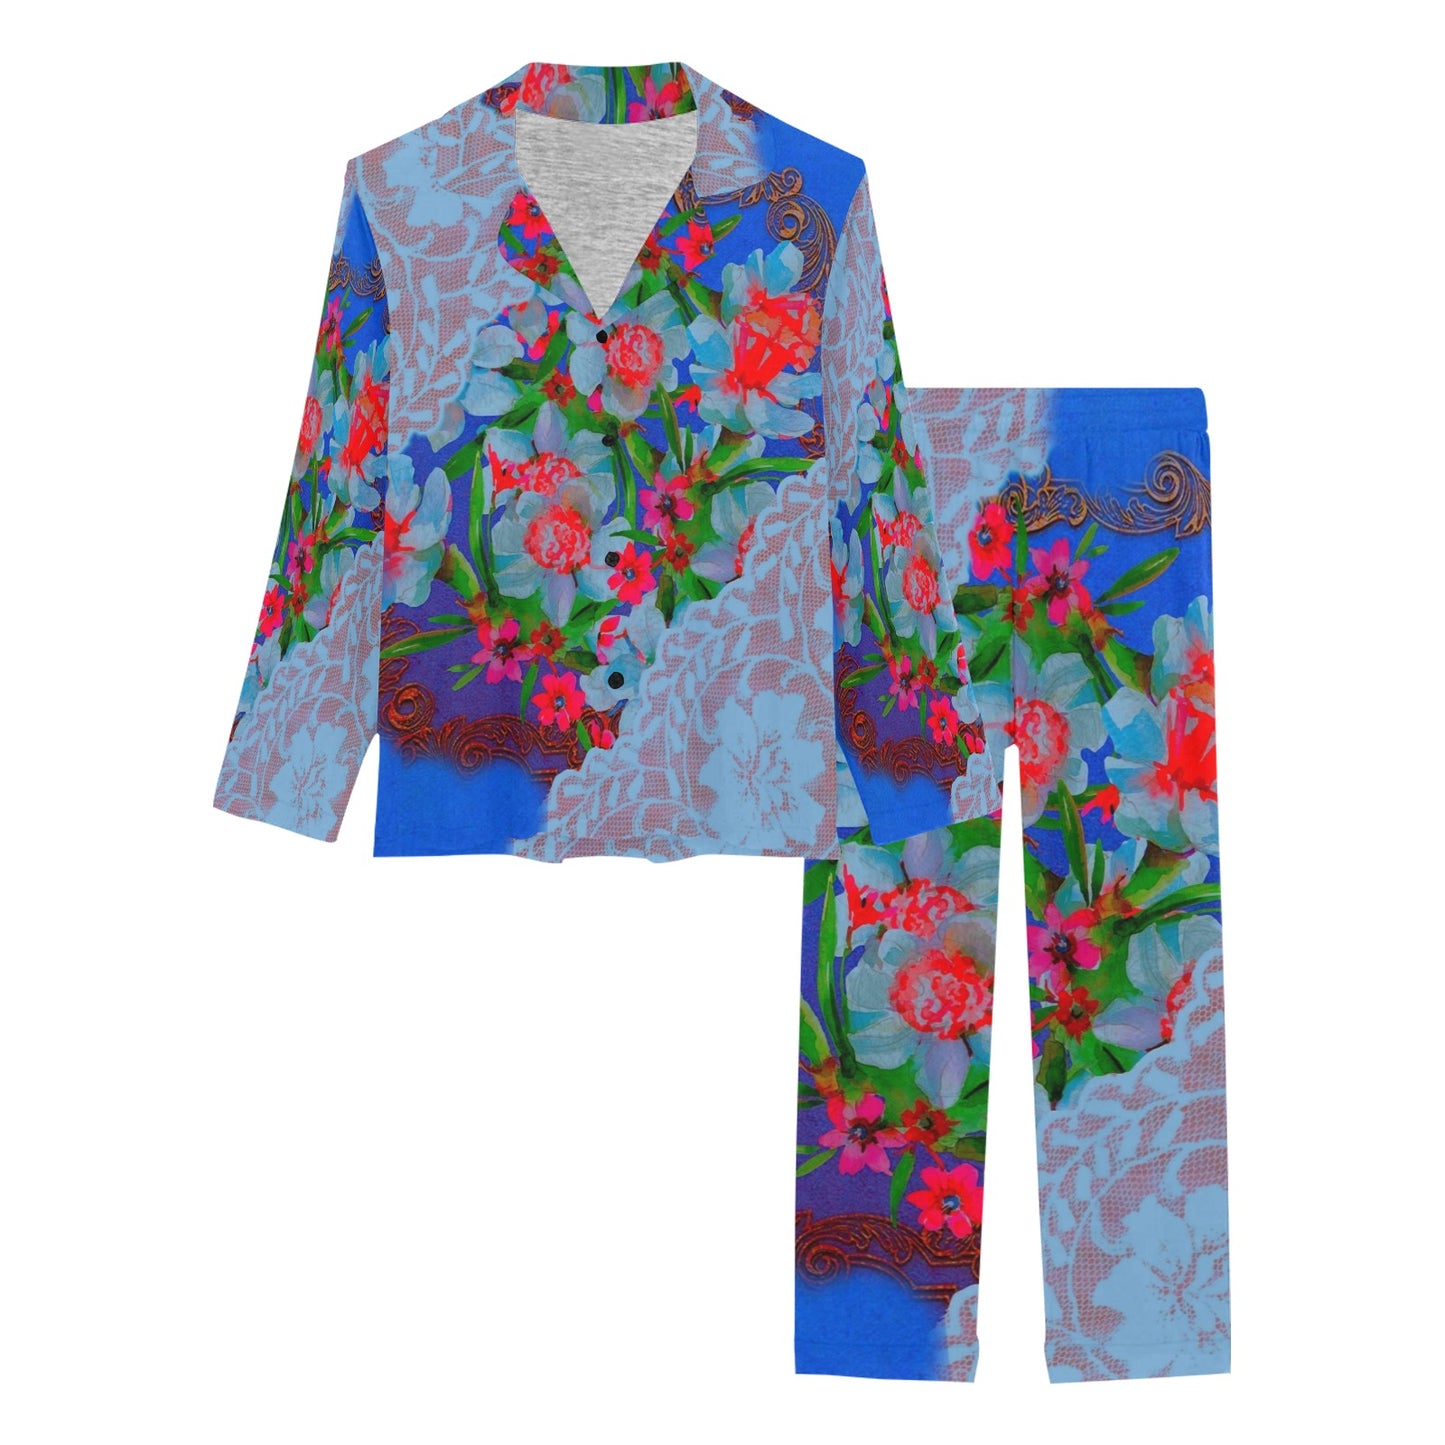 Victorian printed lace pajama set, design 46 Women's Long Pajama Set (Sets 02)